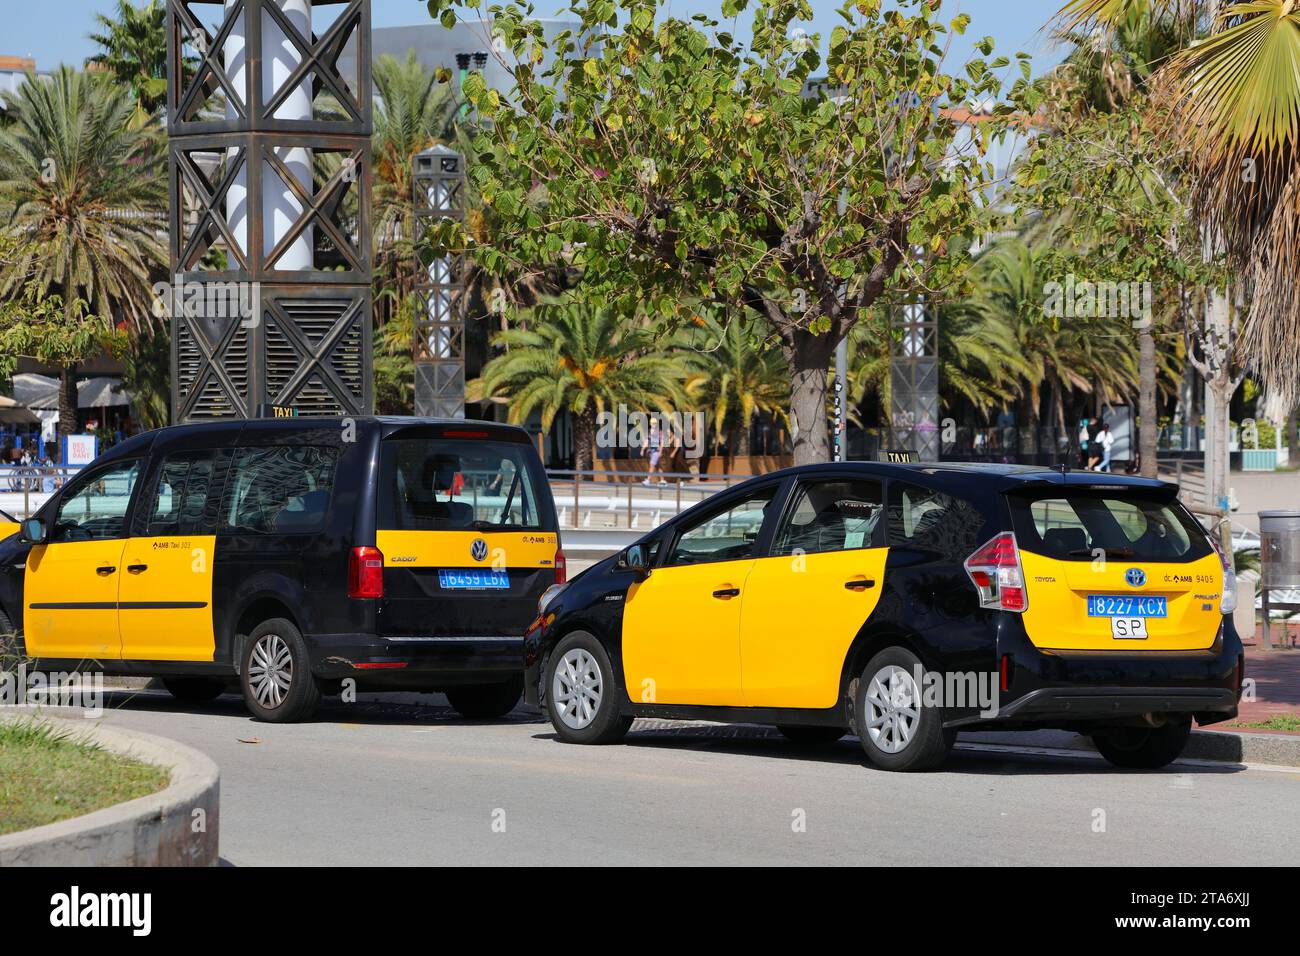 BARCELONA, SPANIEN - 7. OKTOBER 2021: Offizielle lizenzierte Taxis in Barcelona, Spanien. Barcelona ist die 2. größte Stadt Spaniens. Stockfoto